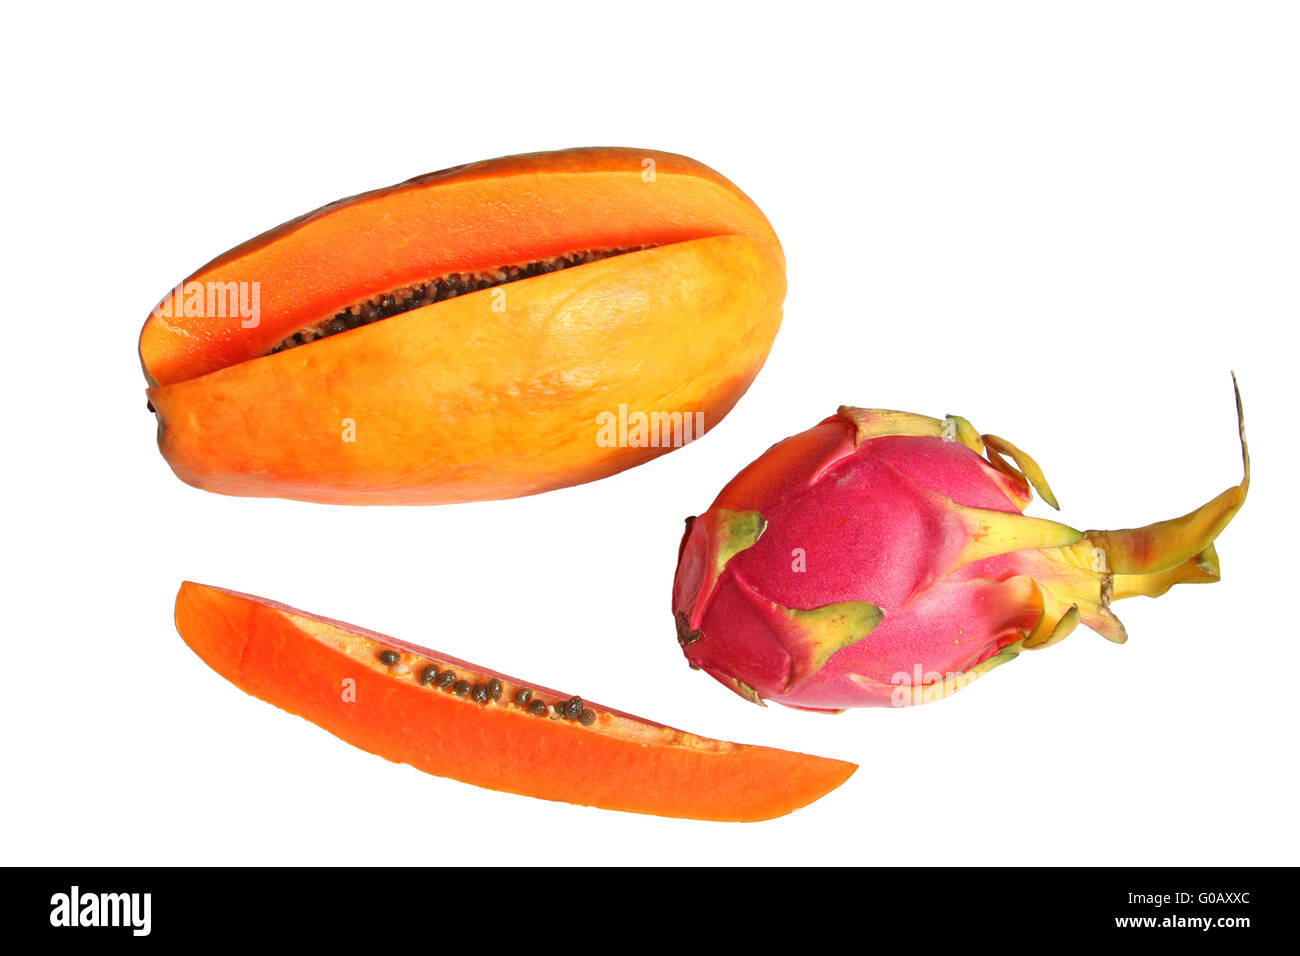 Tropical fruits - dragon fruit (Red Pitaya or Hylo Stock Photo